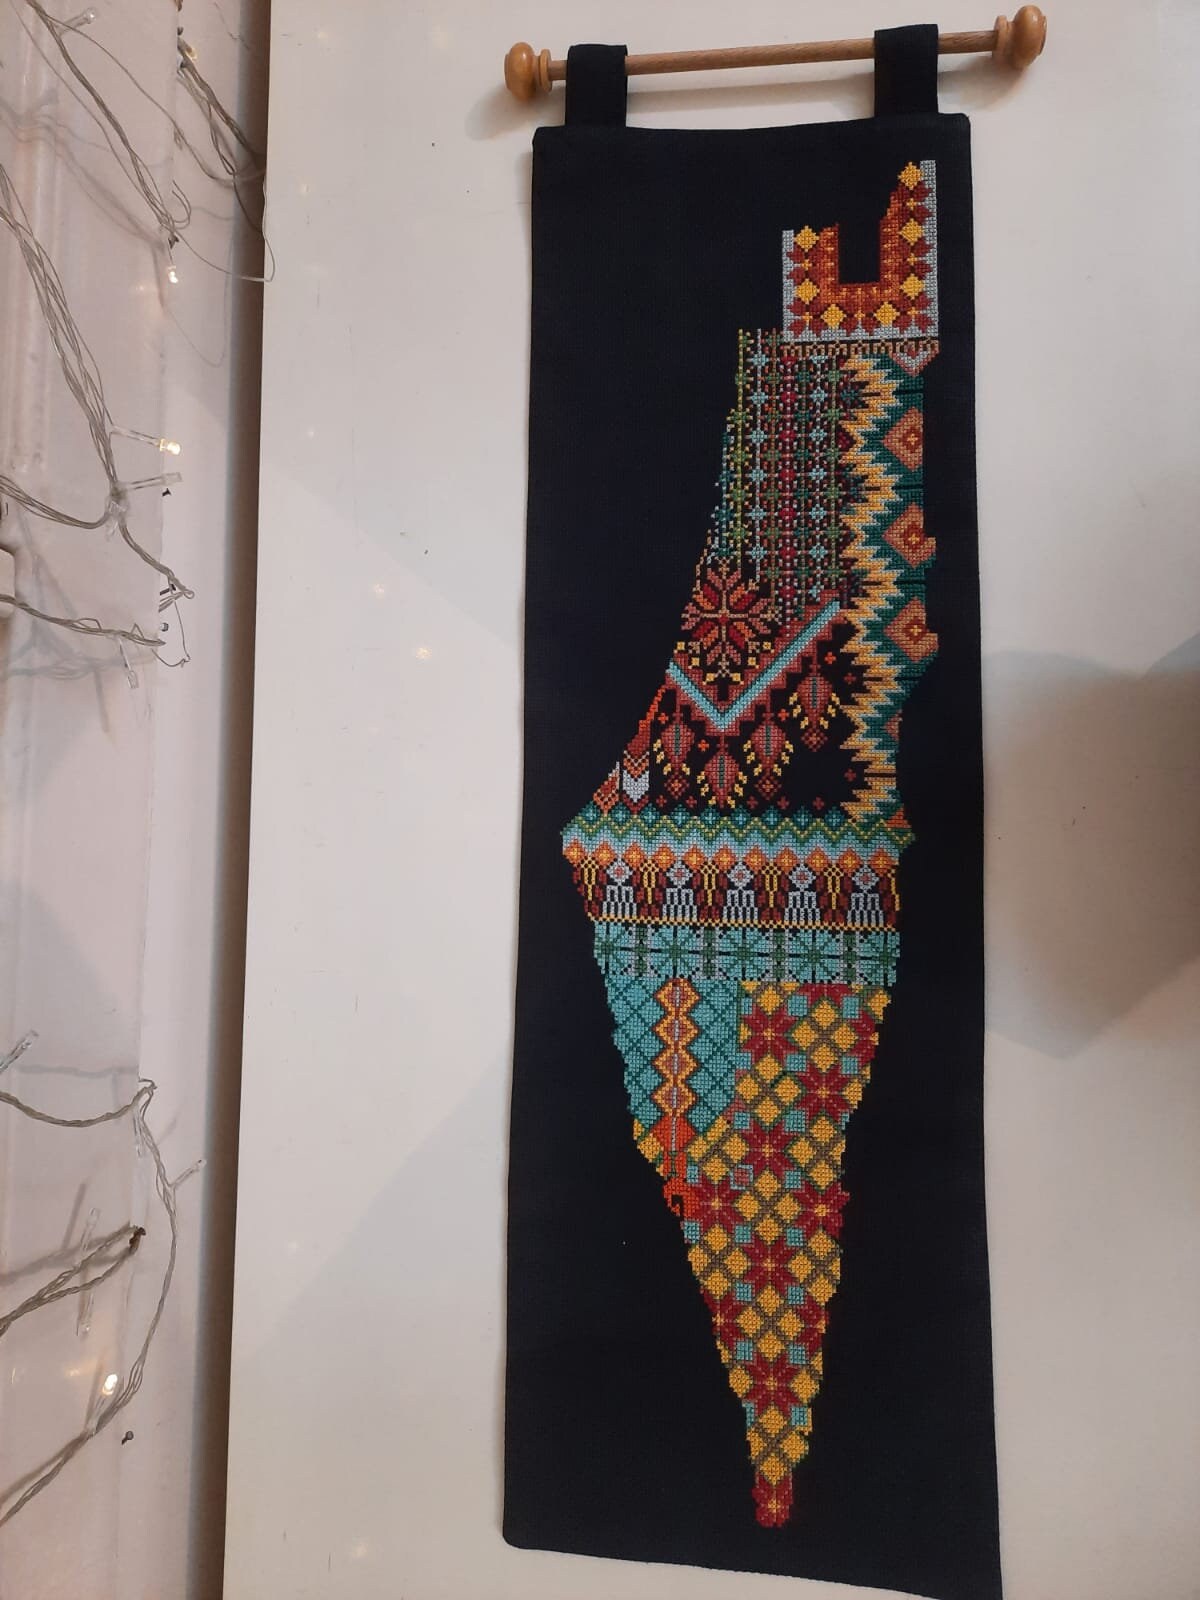 Palestinian keffiyeh map pattern Wall Tapestry by Mo5tar